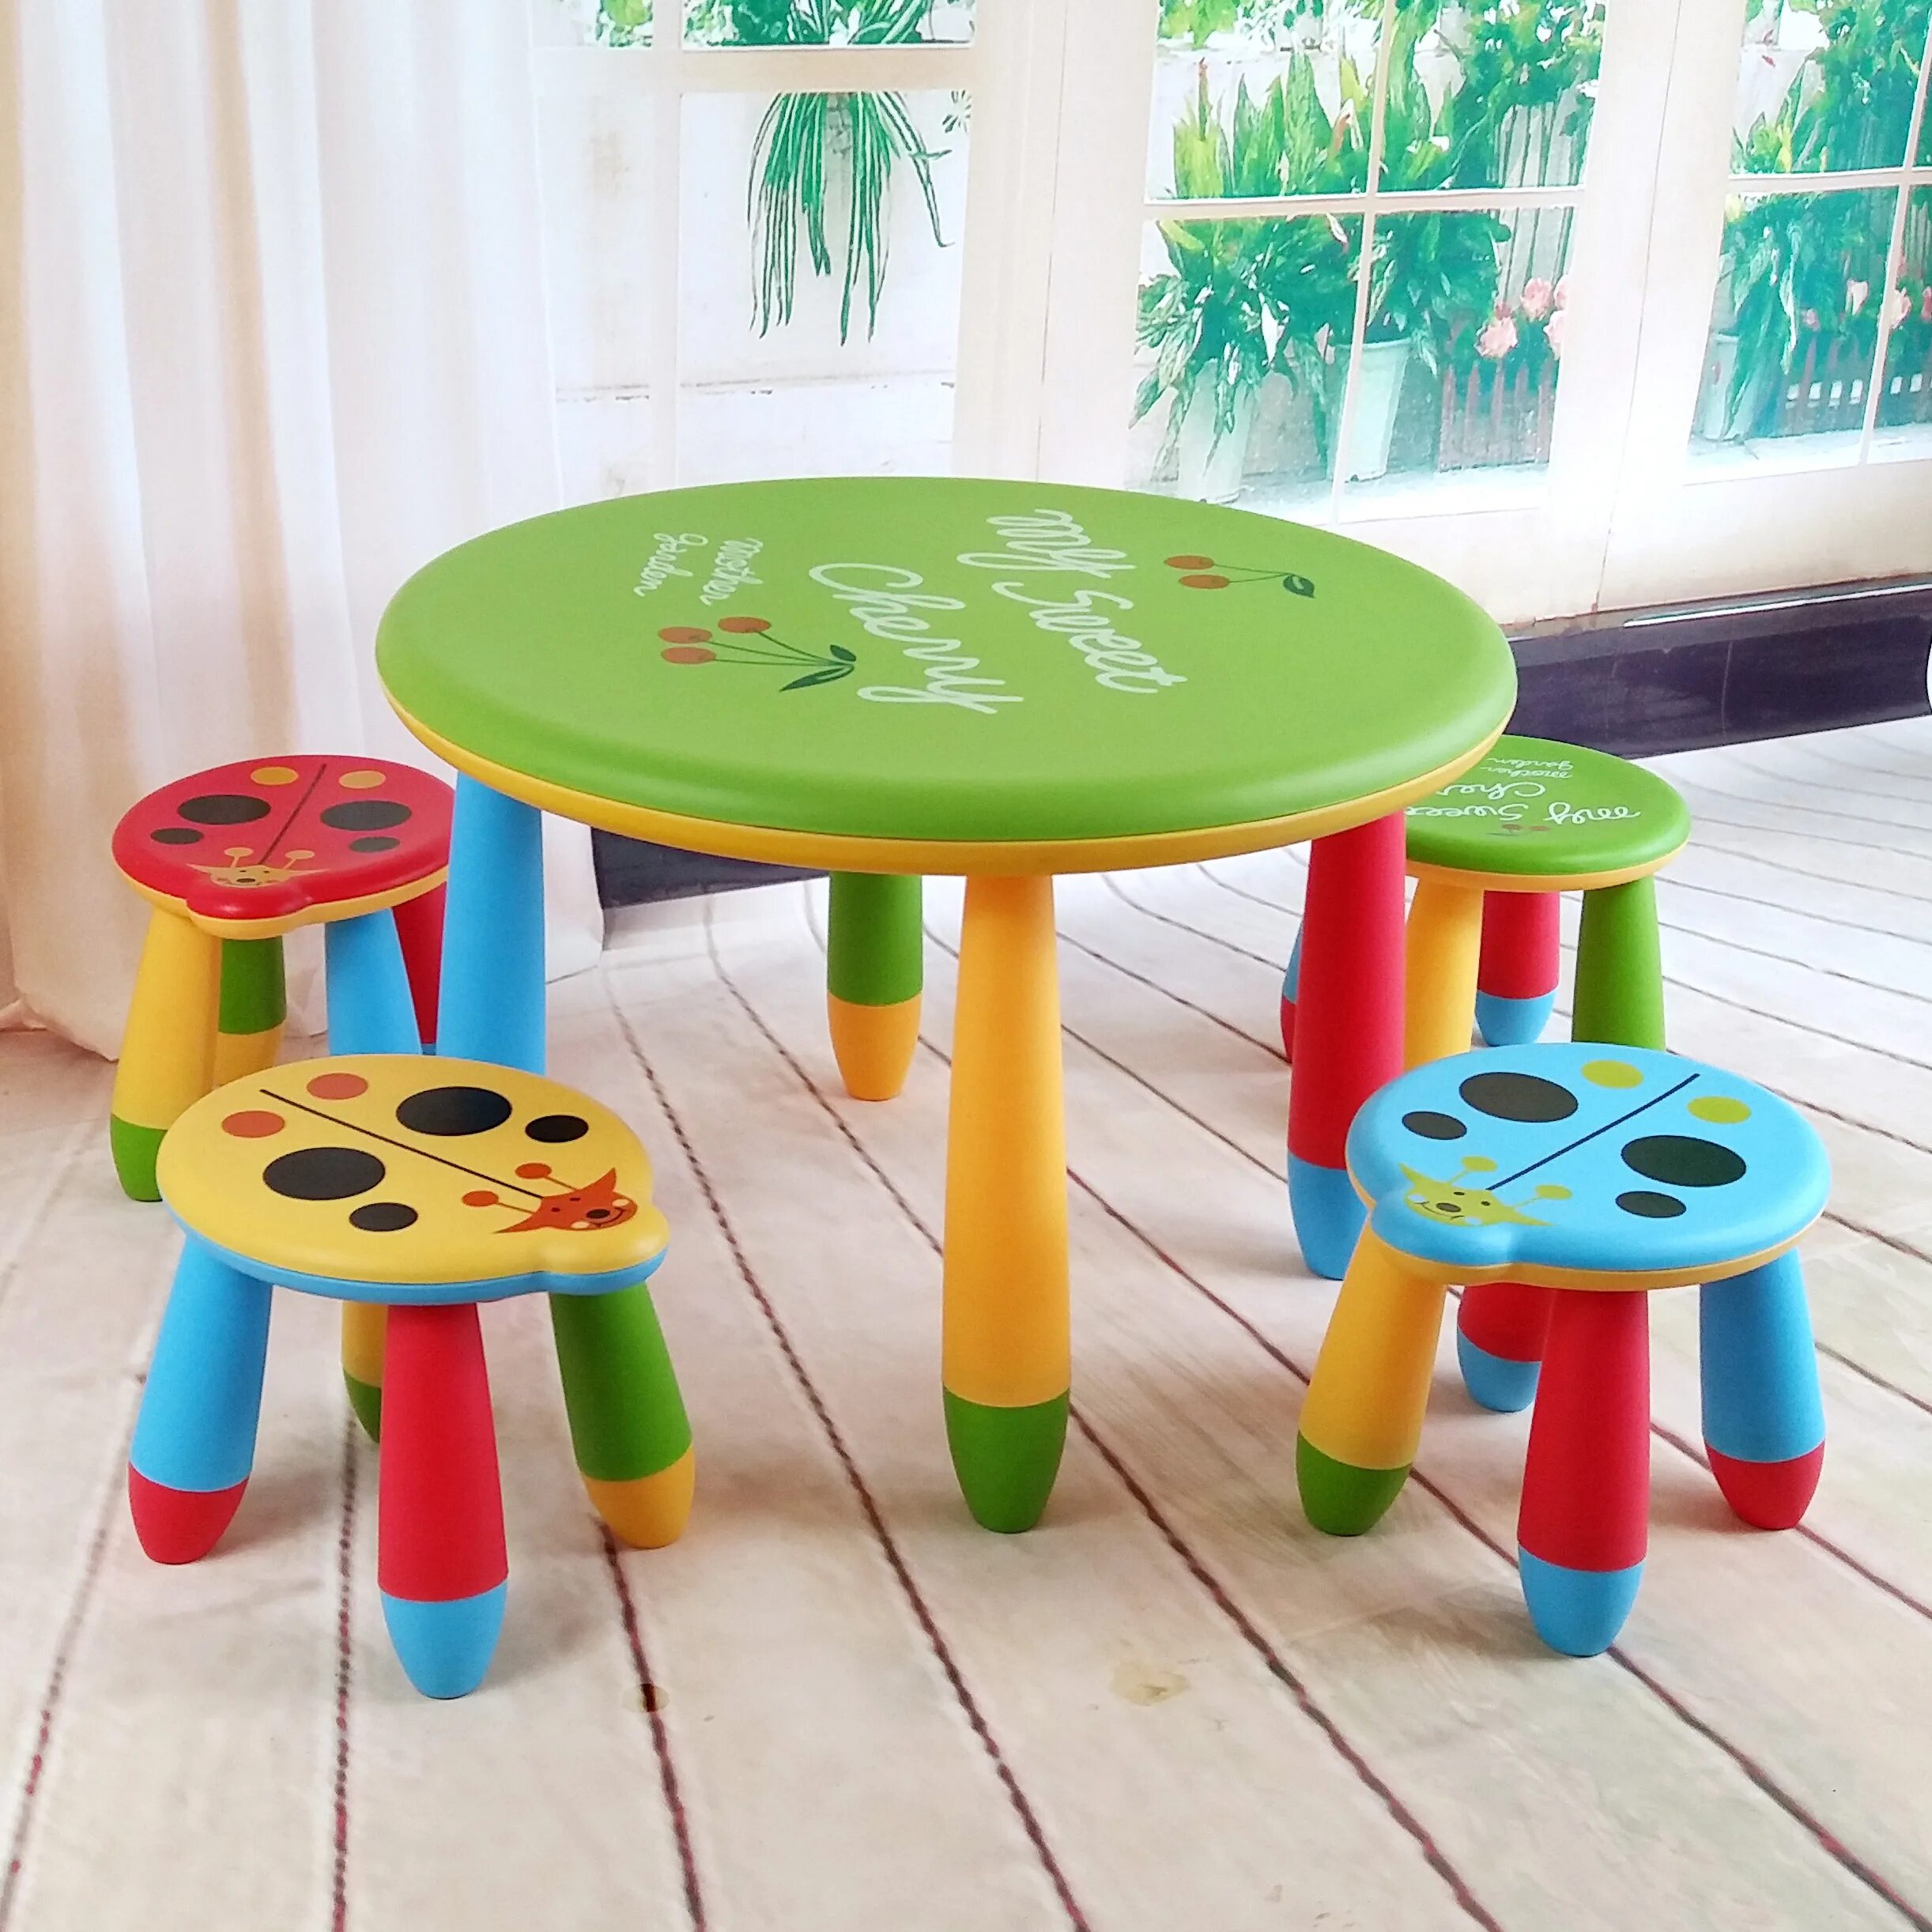 Круглый стол для детского сада. Столик для детей. Стол круглый детский. Стол детский пластиковый. Круглый столик для детей.